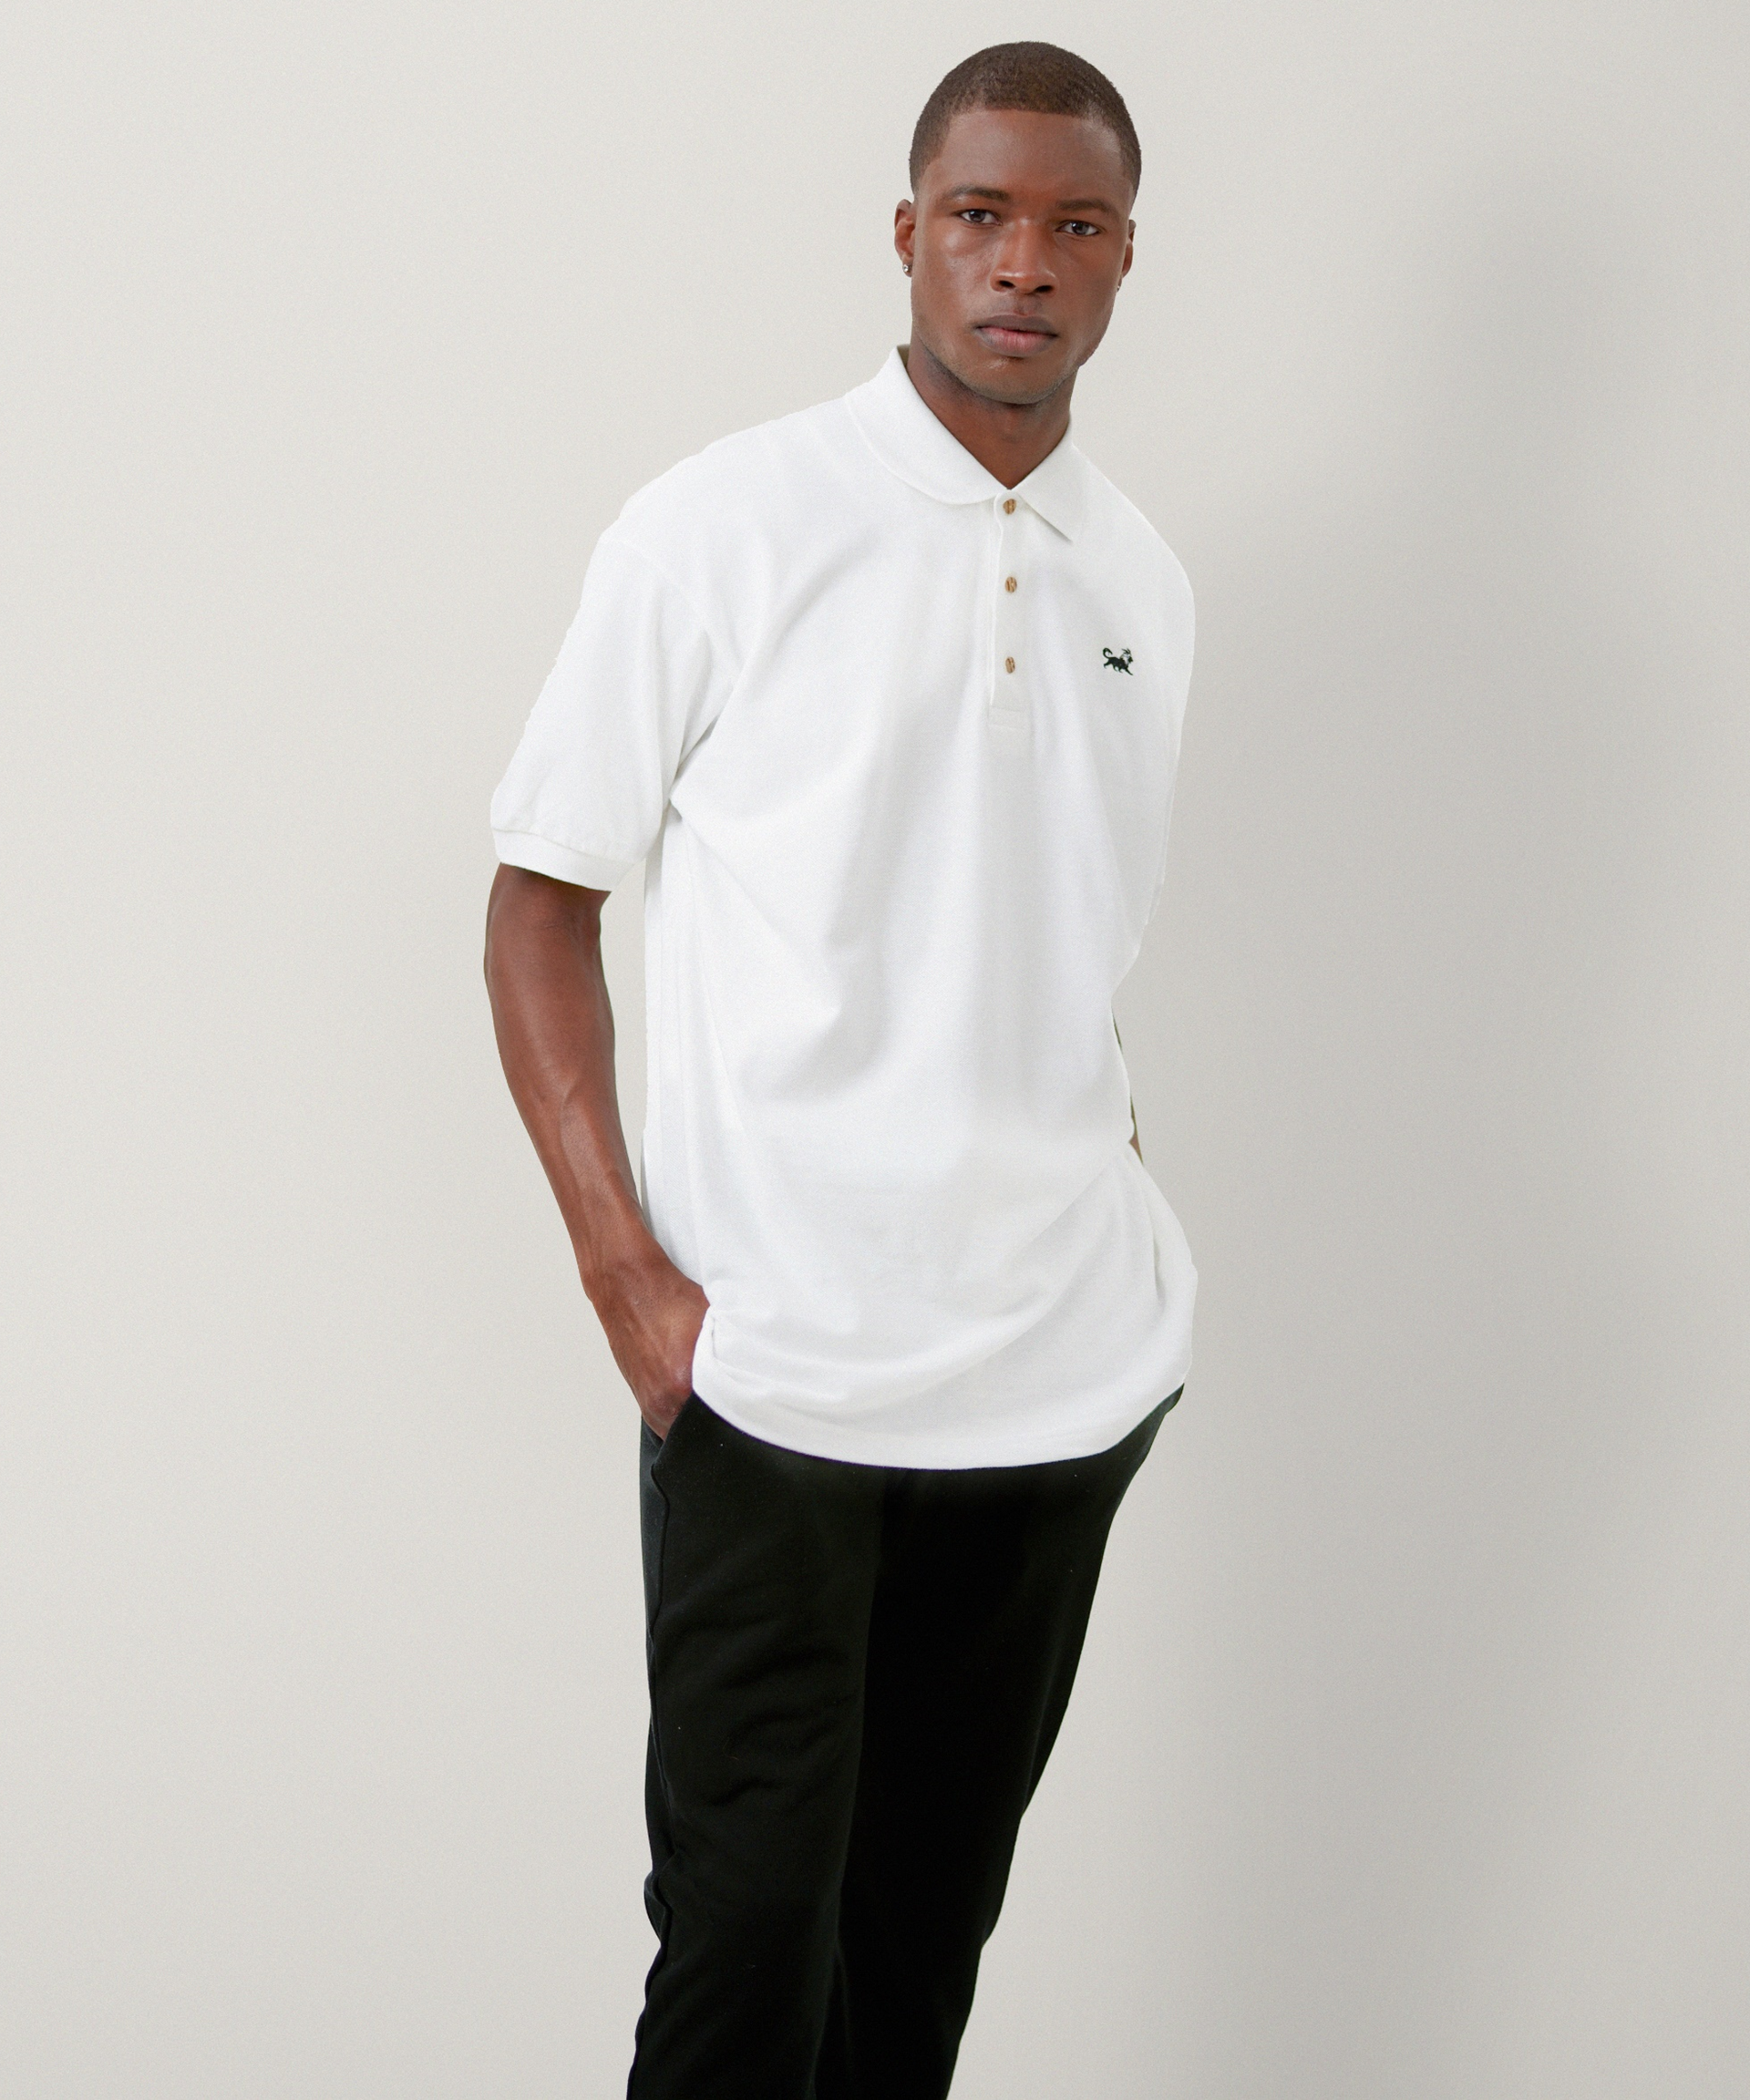 Signature Polo Shirt for Men (White)